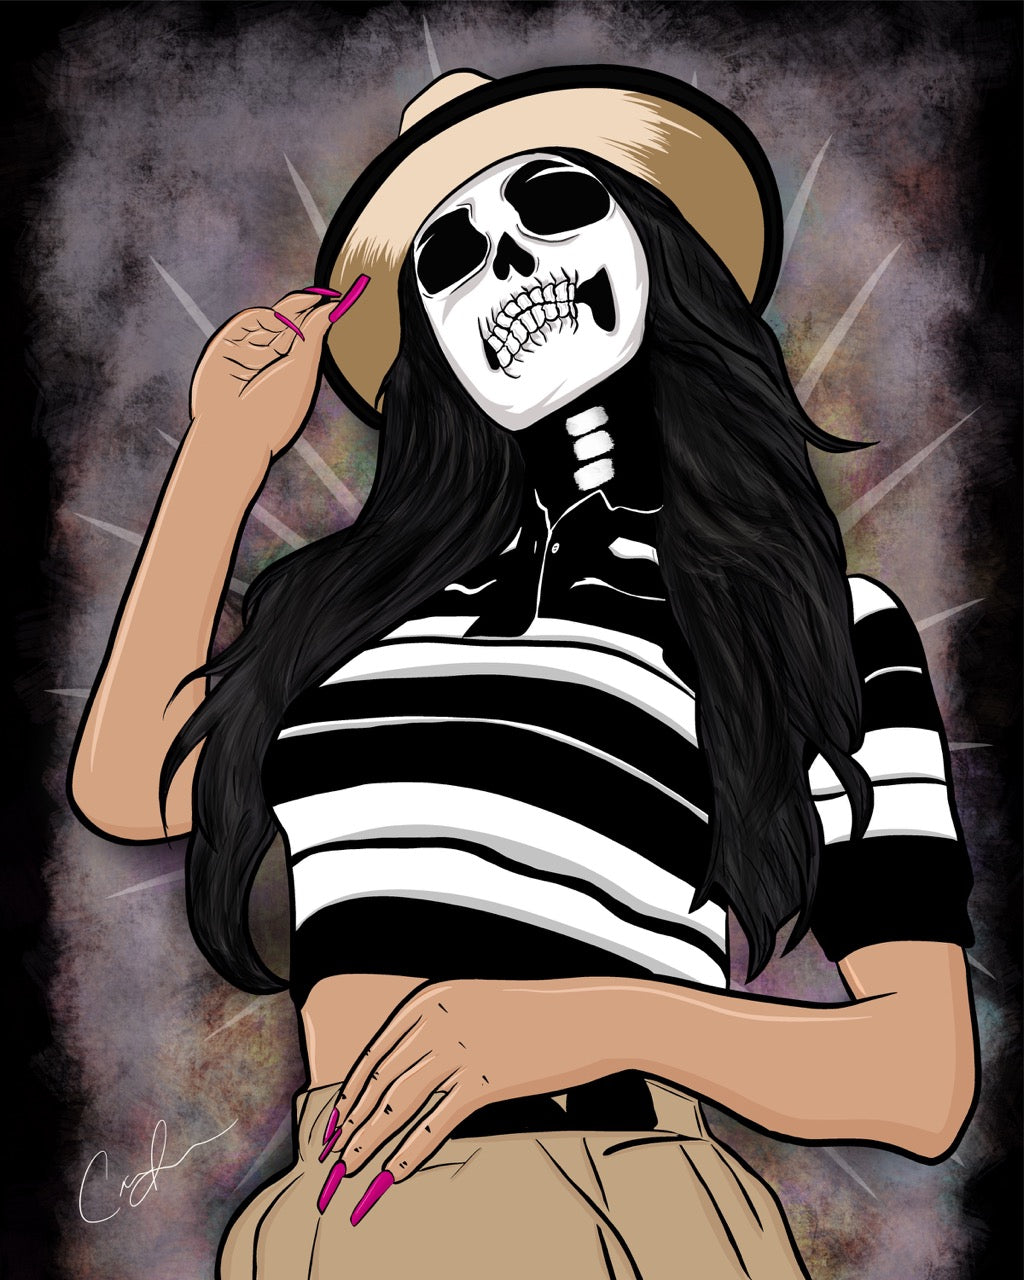 chola sugar skull girl